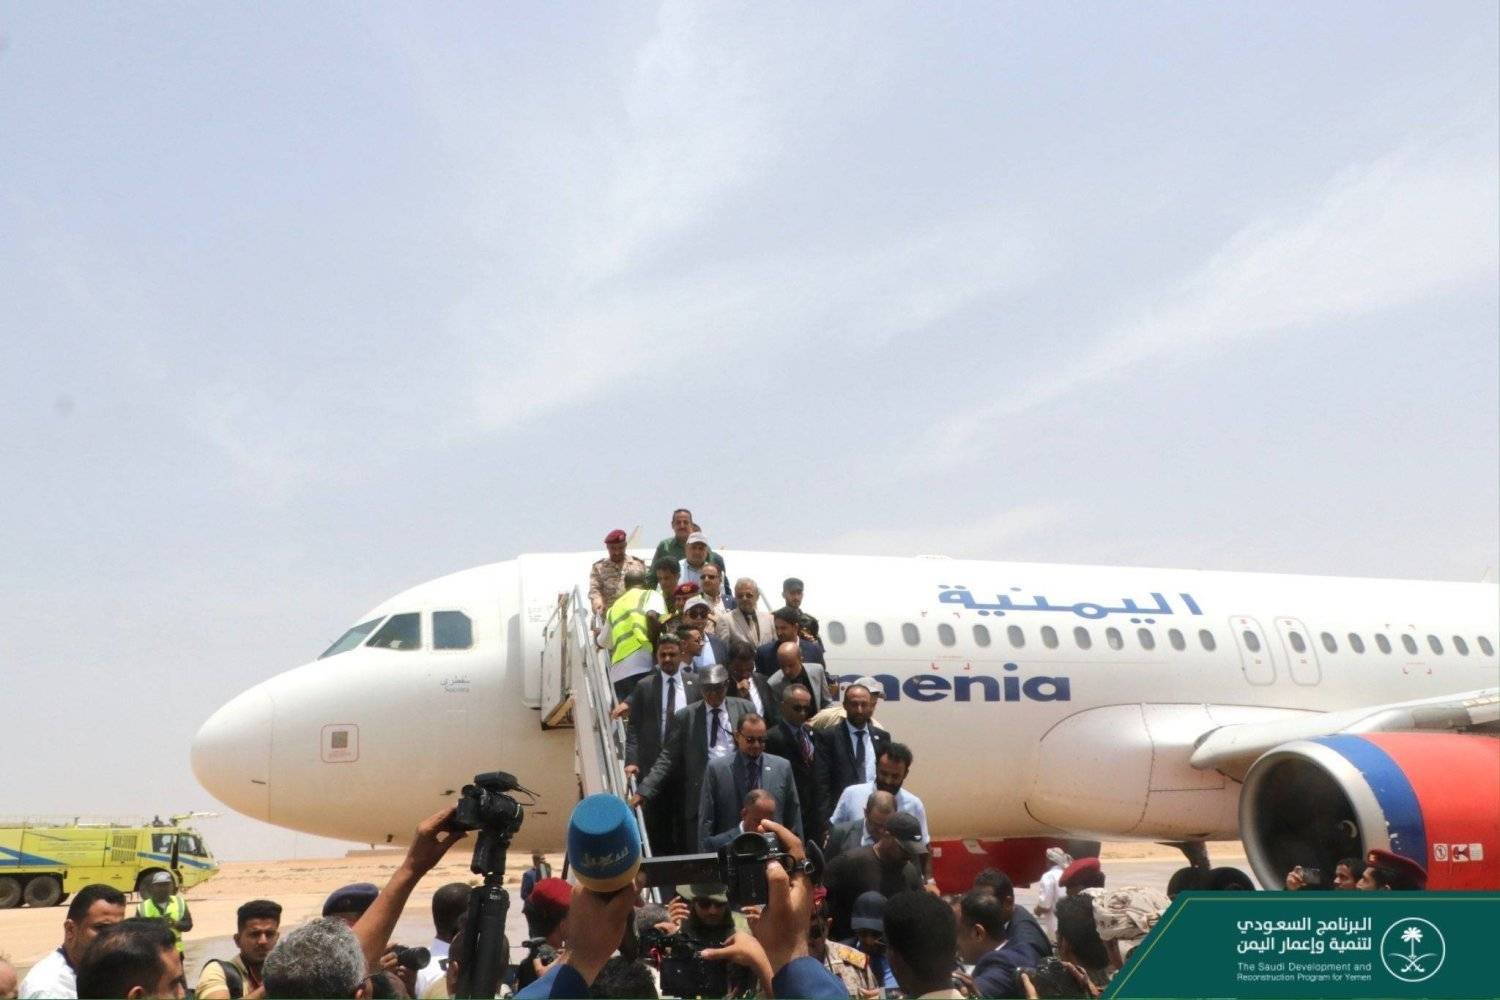  A Yemeni Airlines flight lands at Al-Ghaydah International Airport coming from Al-Rayyan Airport in Mukalla. (Asharq Al-Awsat)
